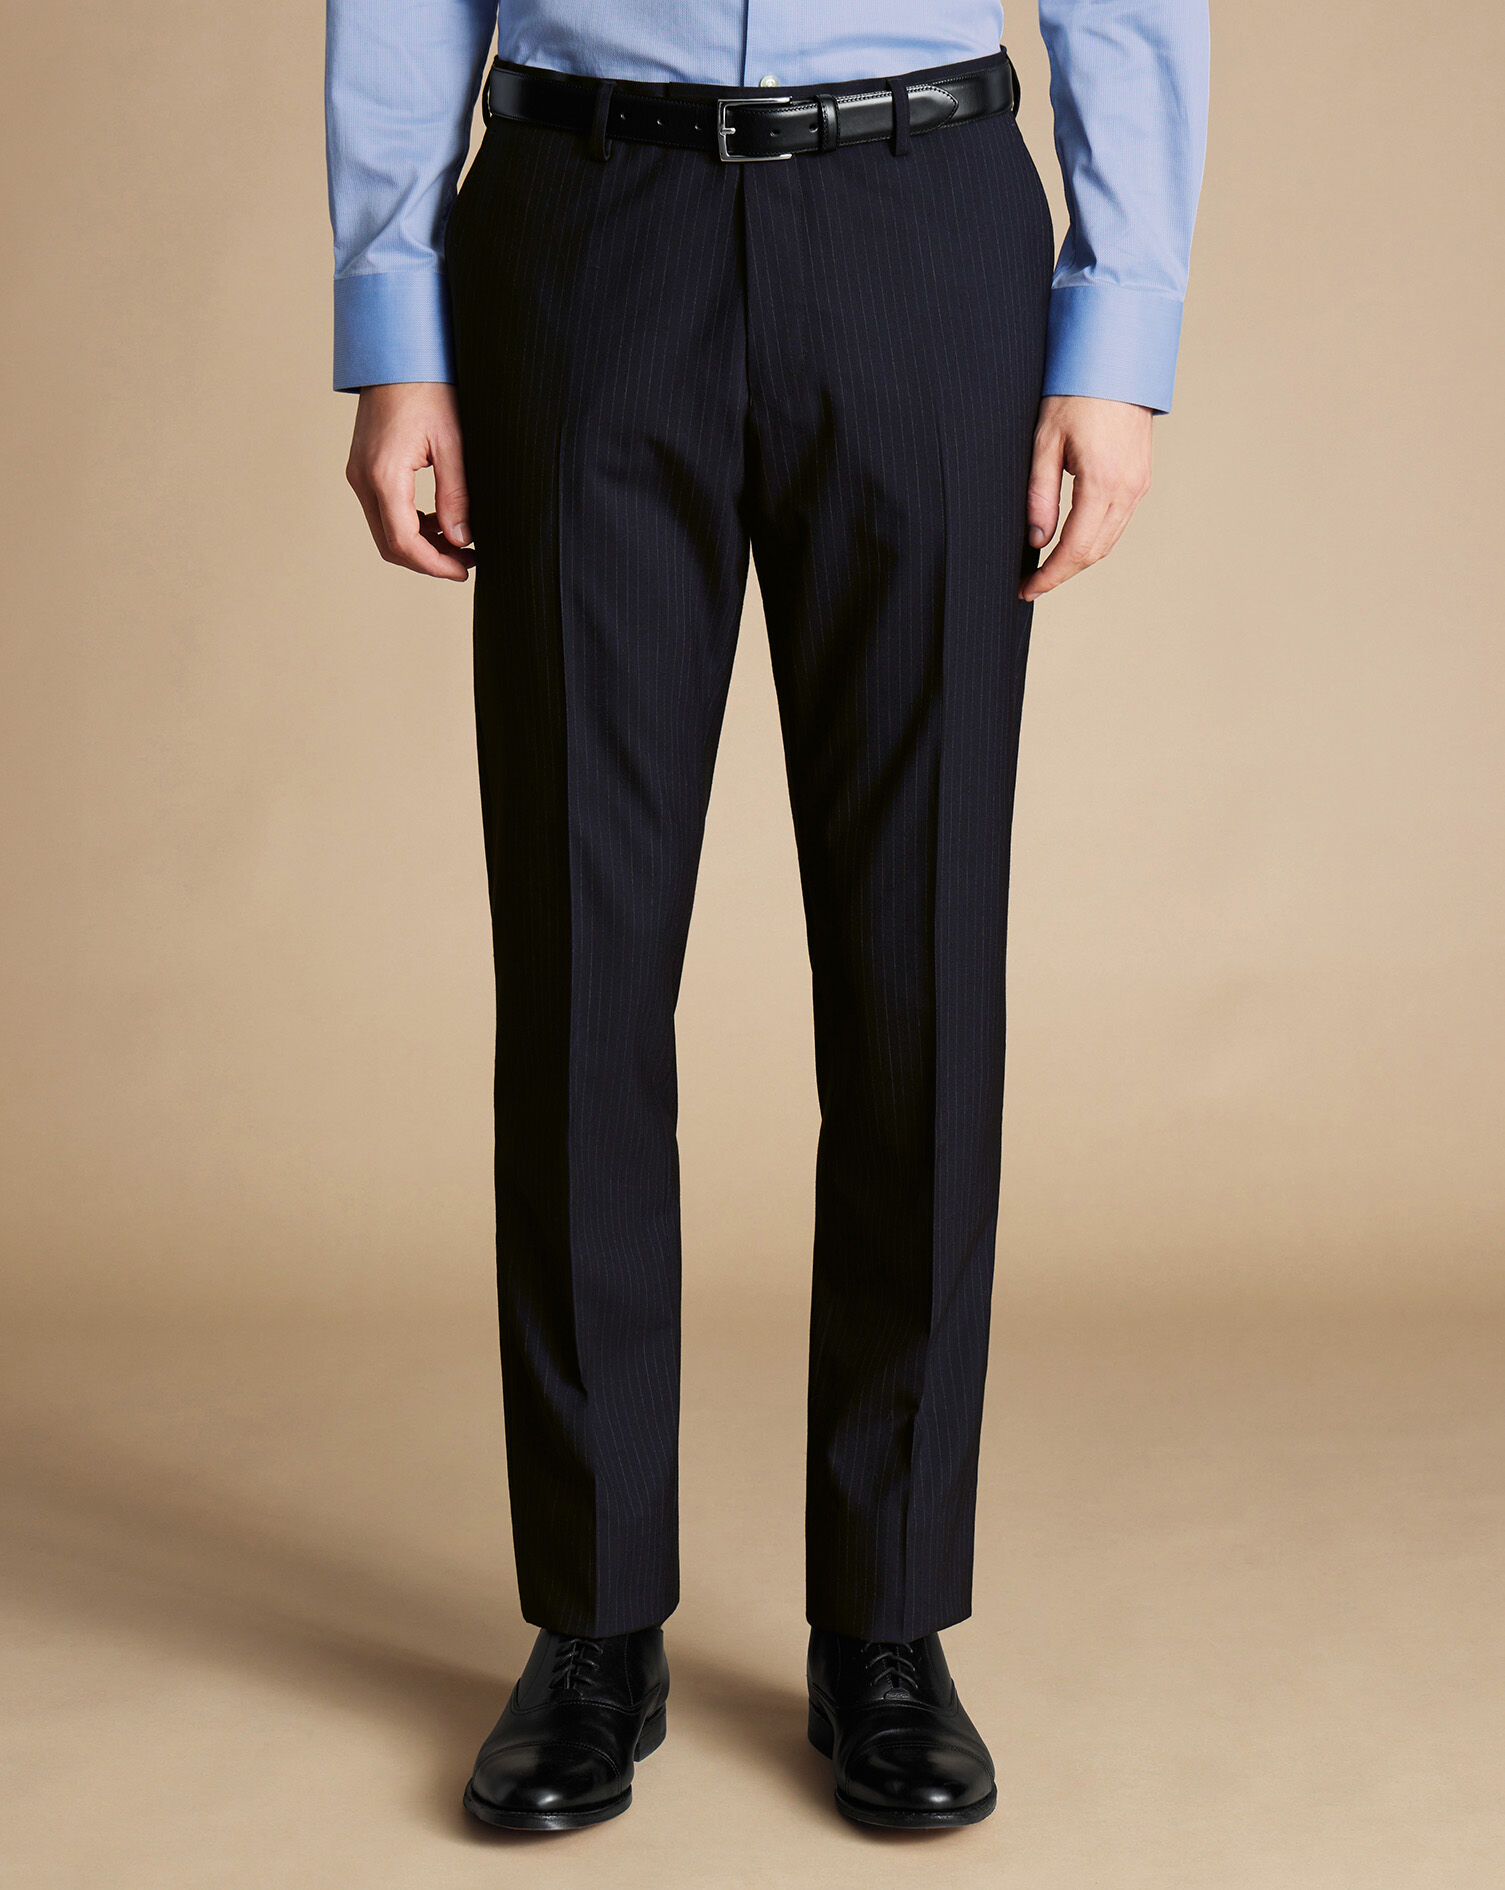 New Look plain suit trouser in black | ASOS